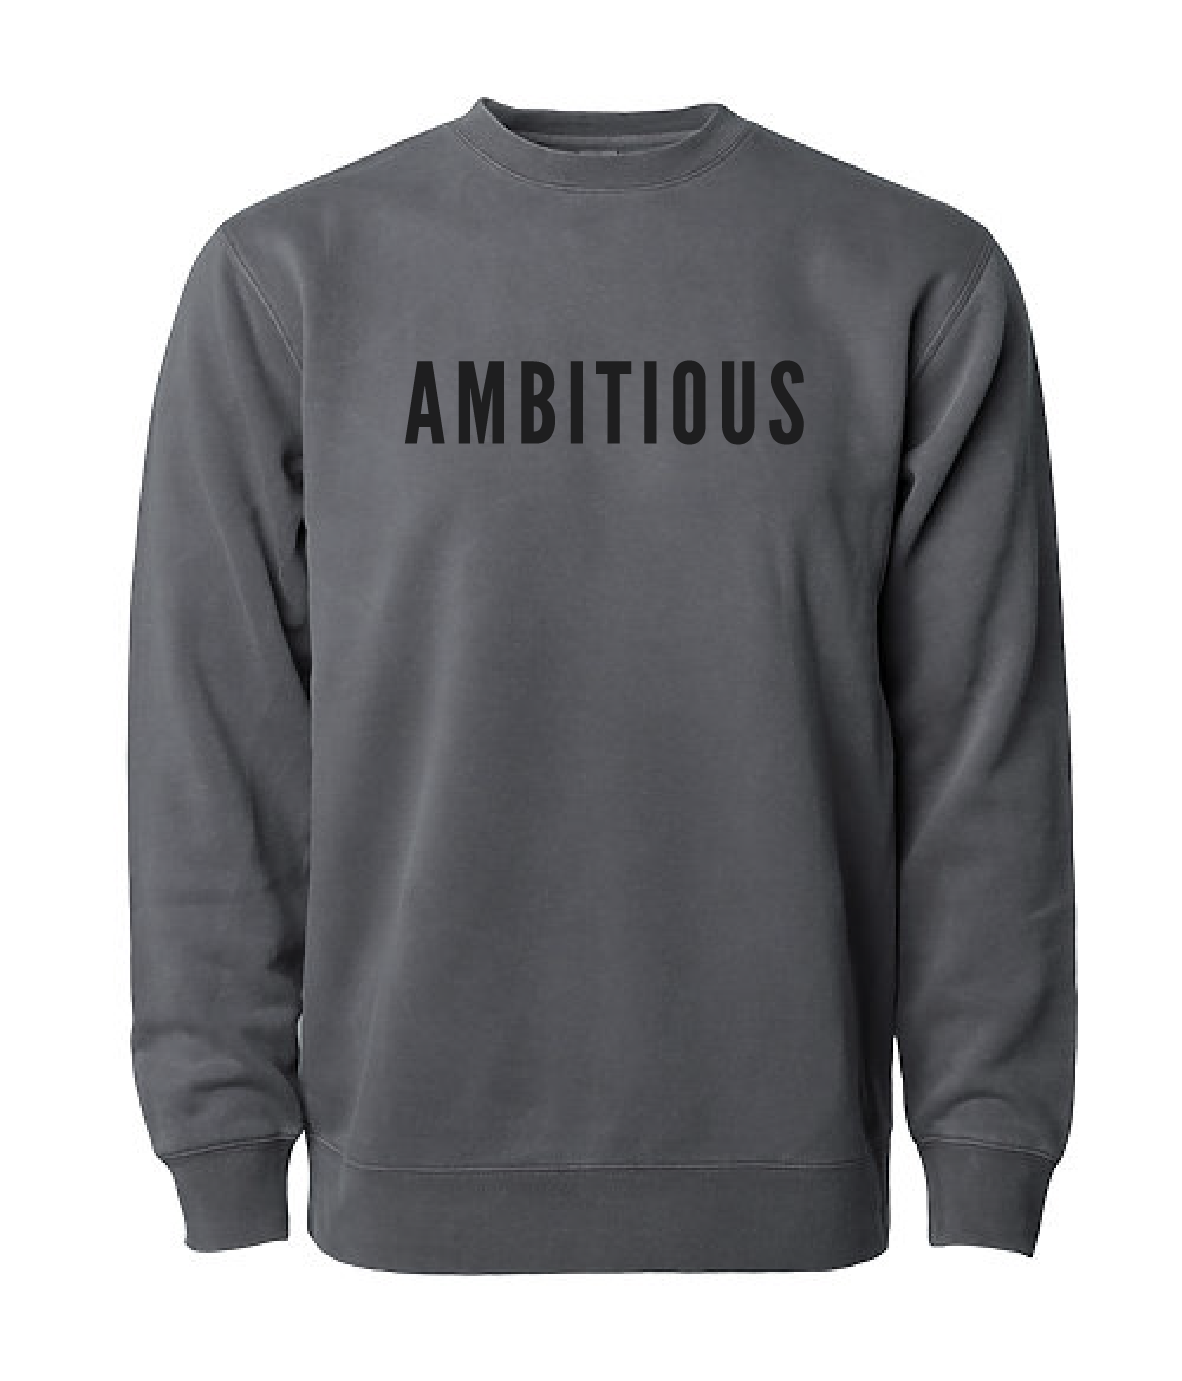 Ambitious Soft Garment Dye Crewneck Sweatshirt (Black)